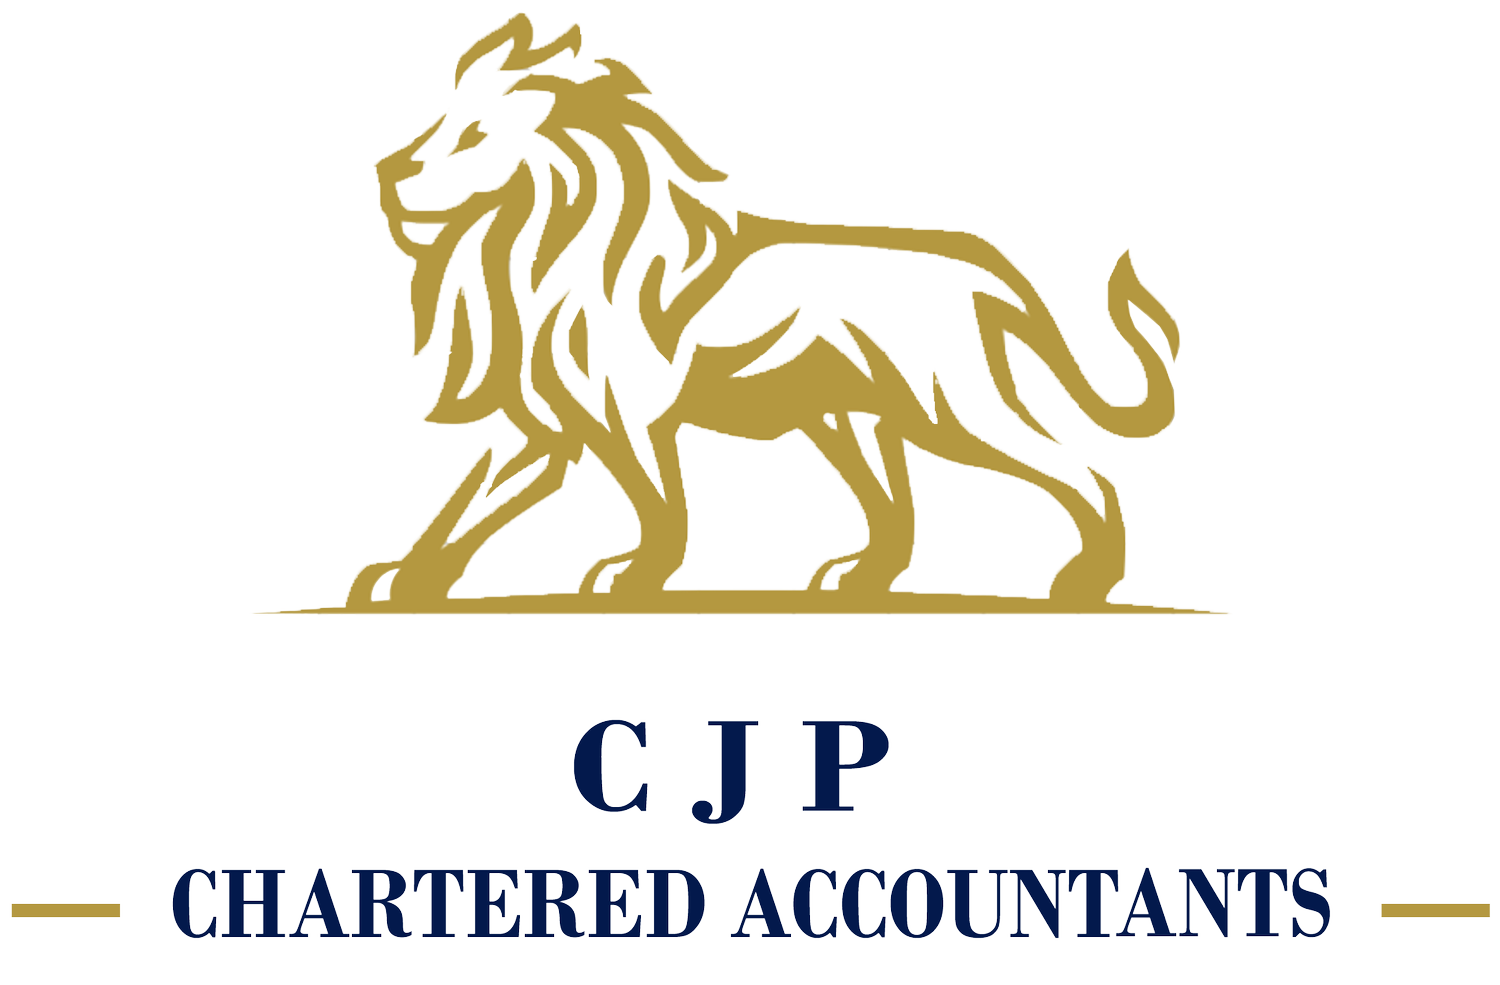 CJP Chartered Accountants